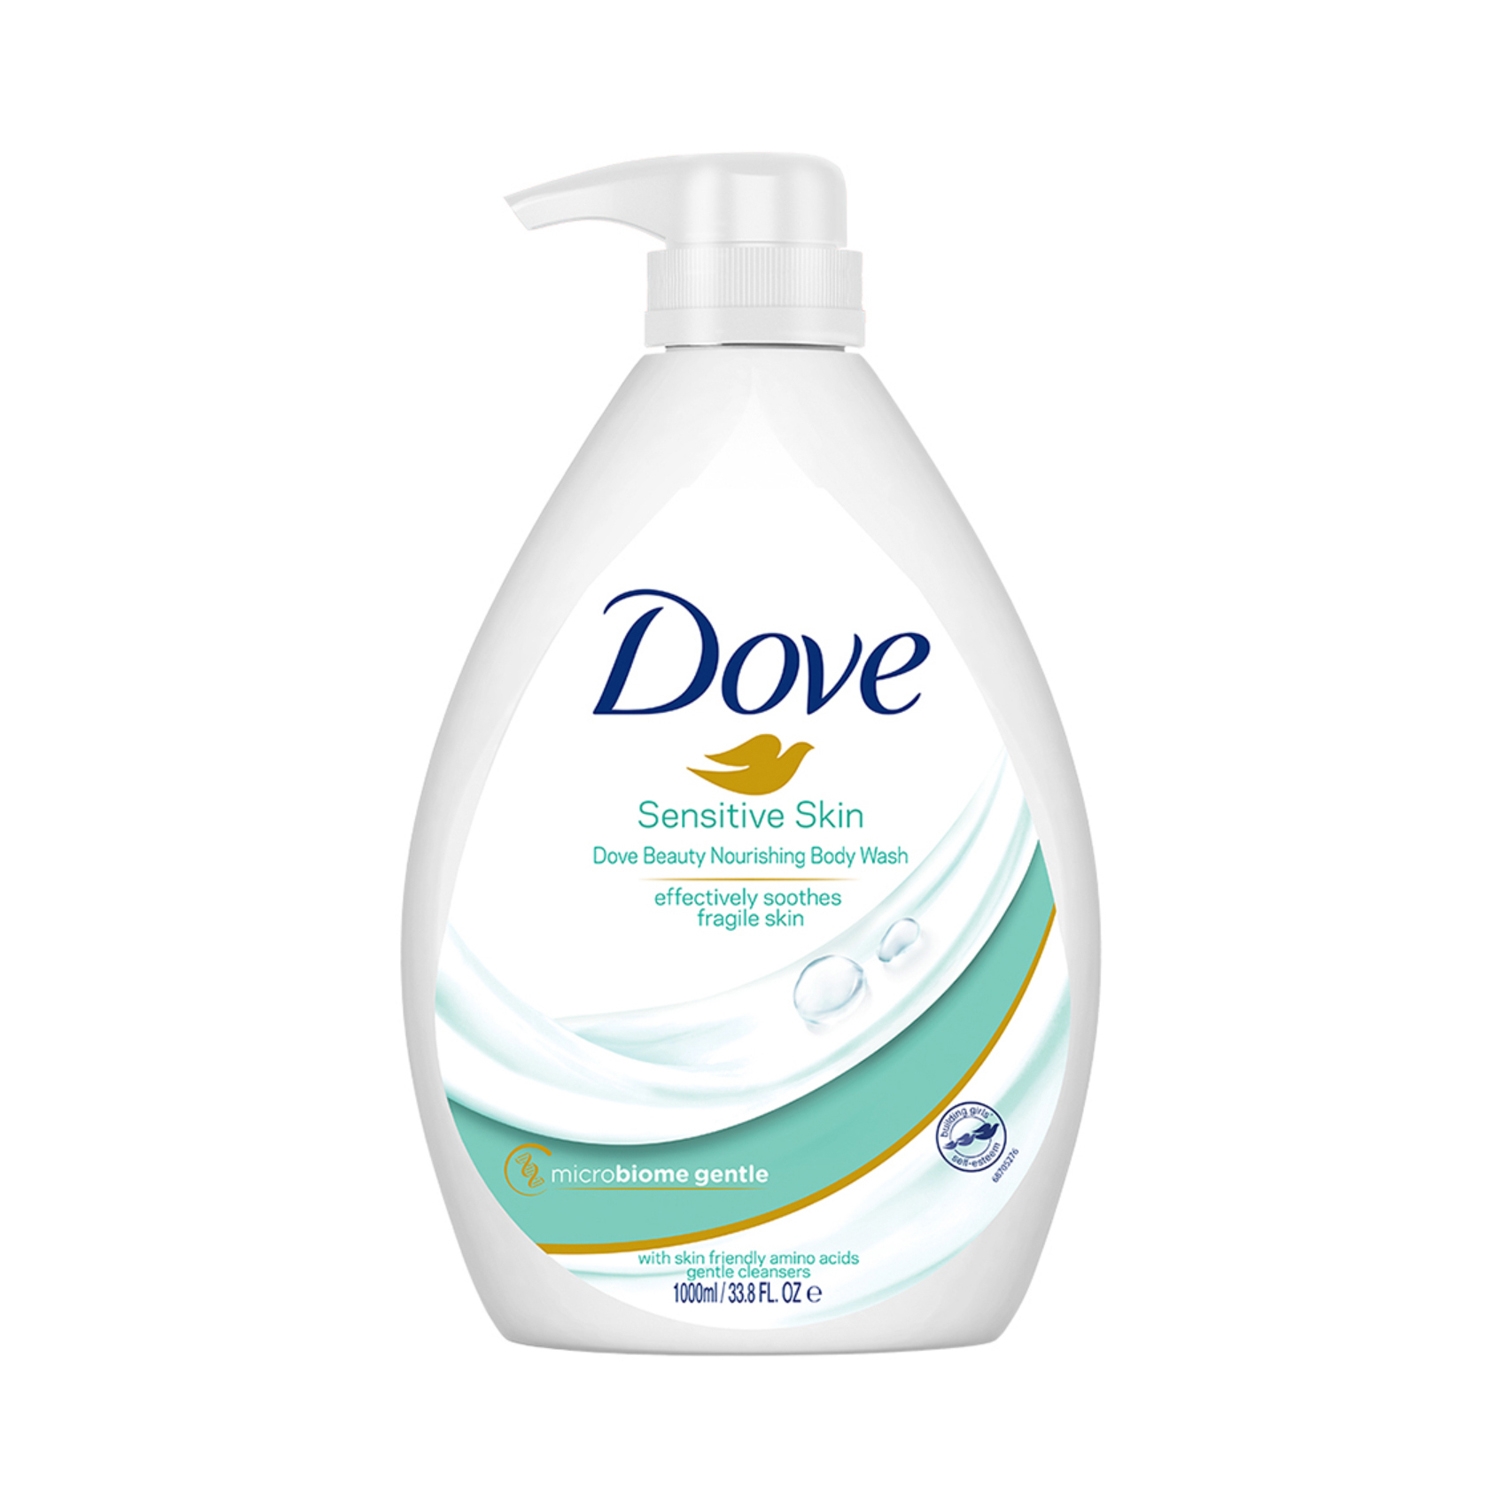 Dove Original Care Deeply Nourishing Cream Shower Gel 250 ml +